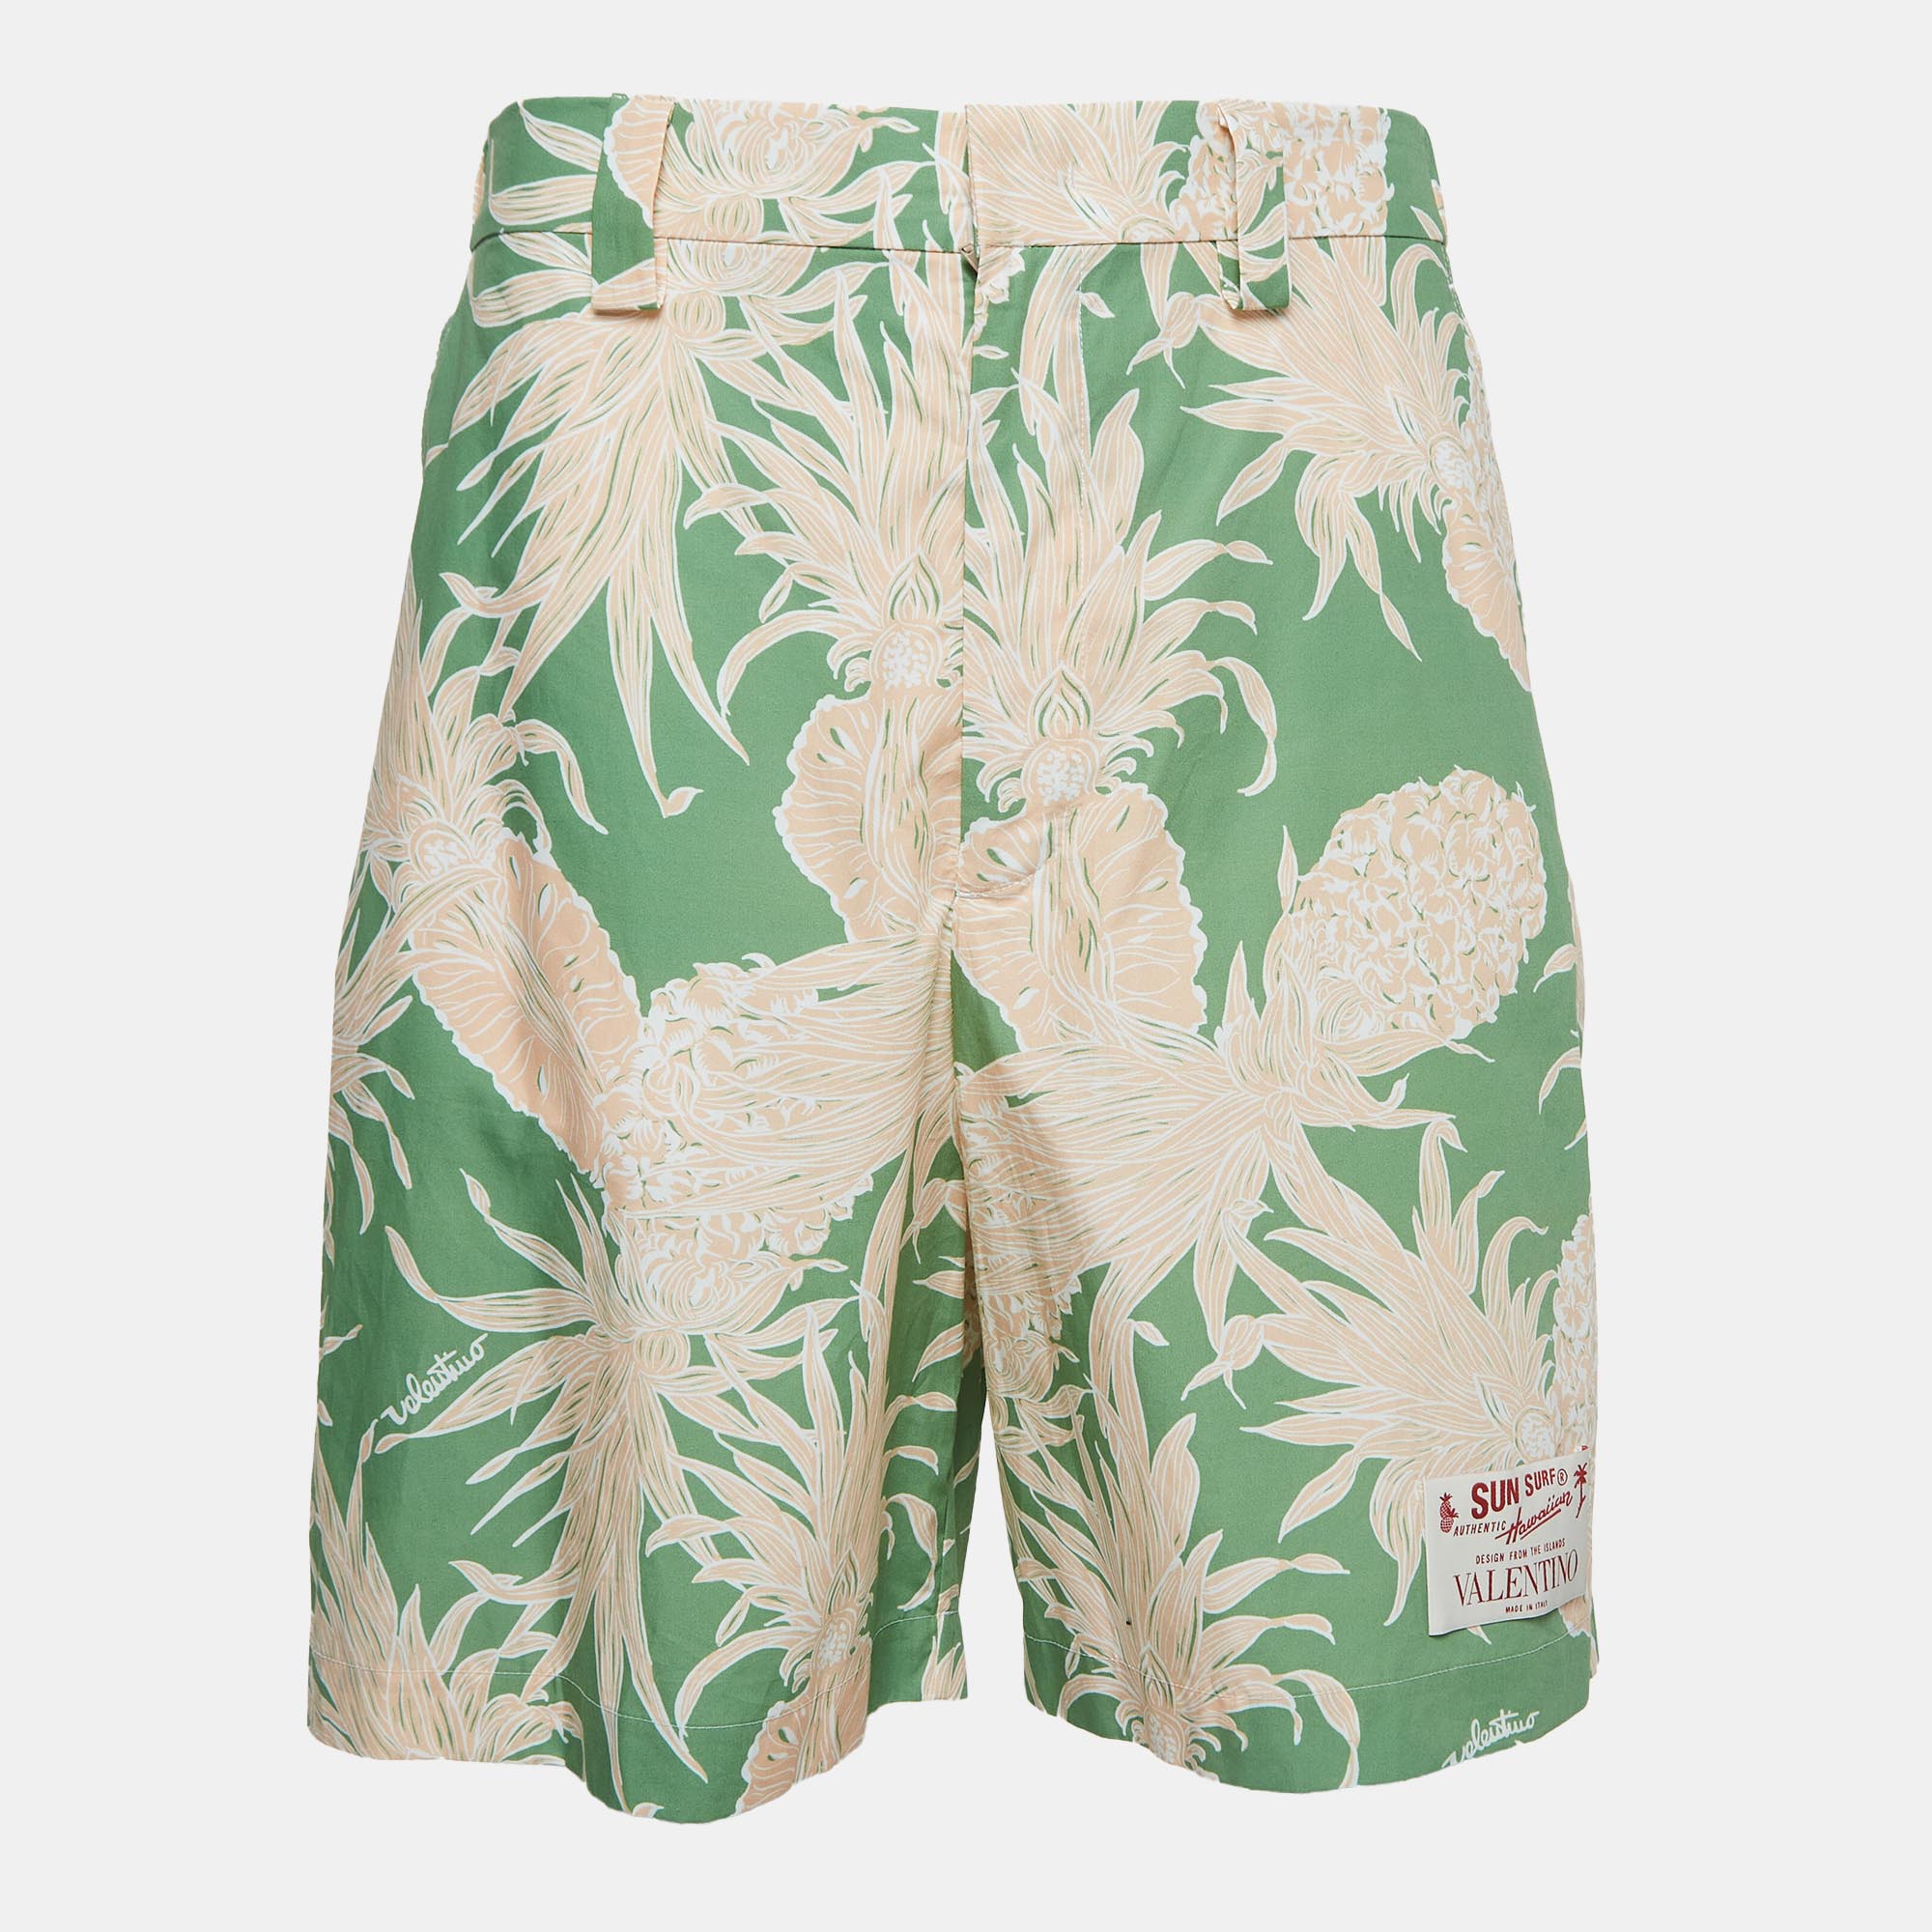 Valentino green pineapple print cotton shorts s